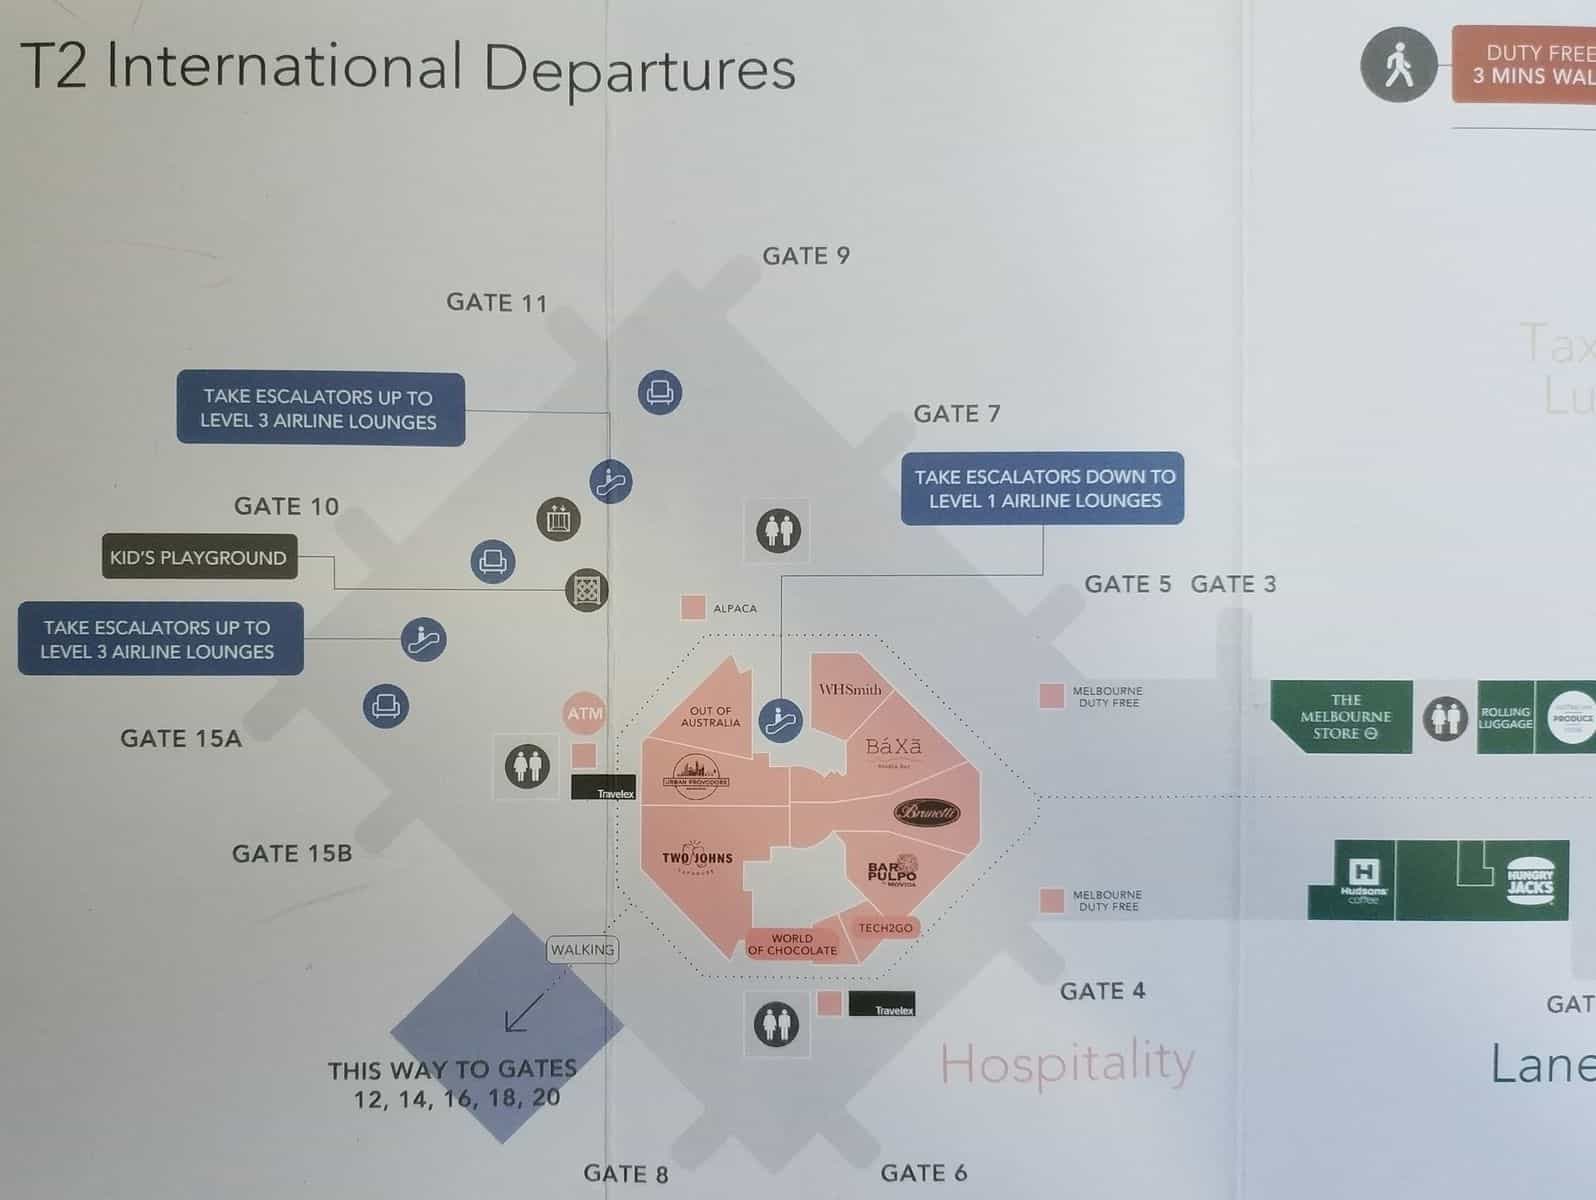 Singapore Airport - Changi Airport Map, Hotel & Duty Free